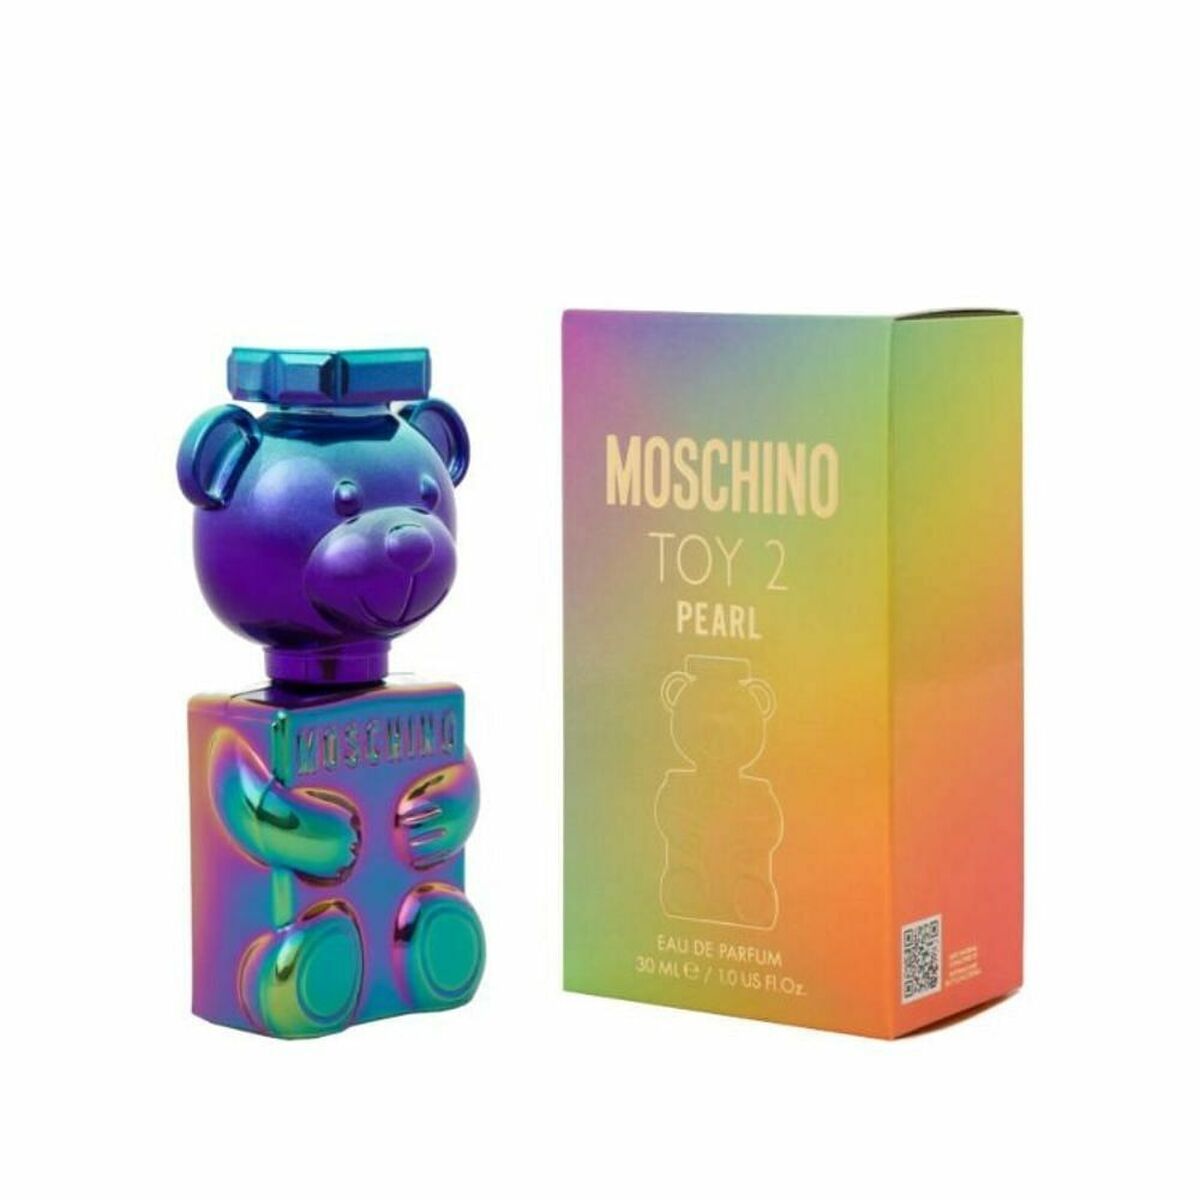 Unisex Perfume Moschino Toy 2 Pearl EDP 30 ml